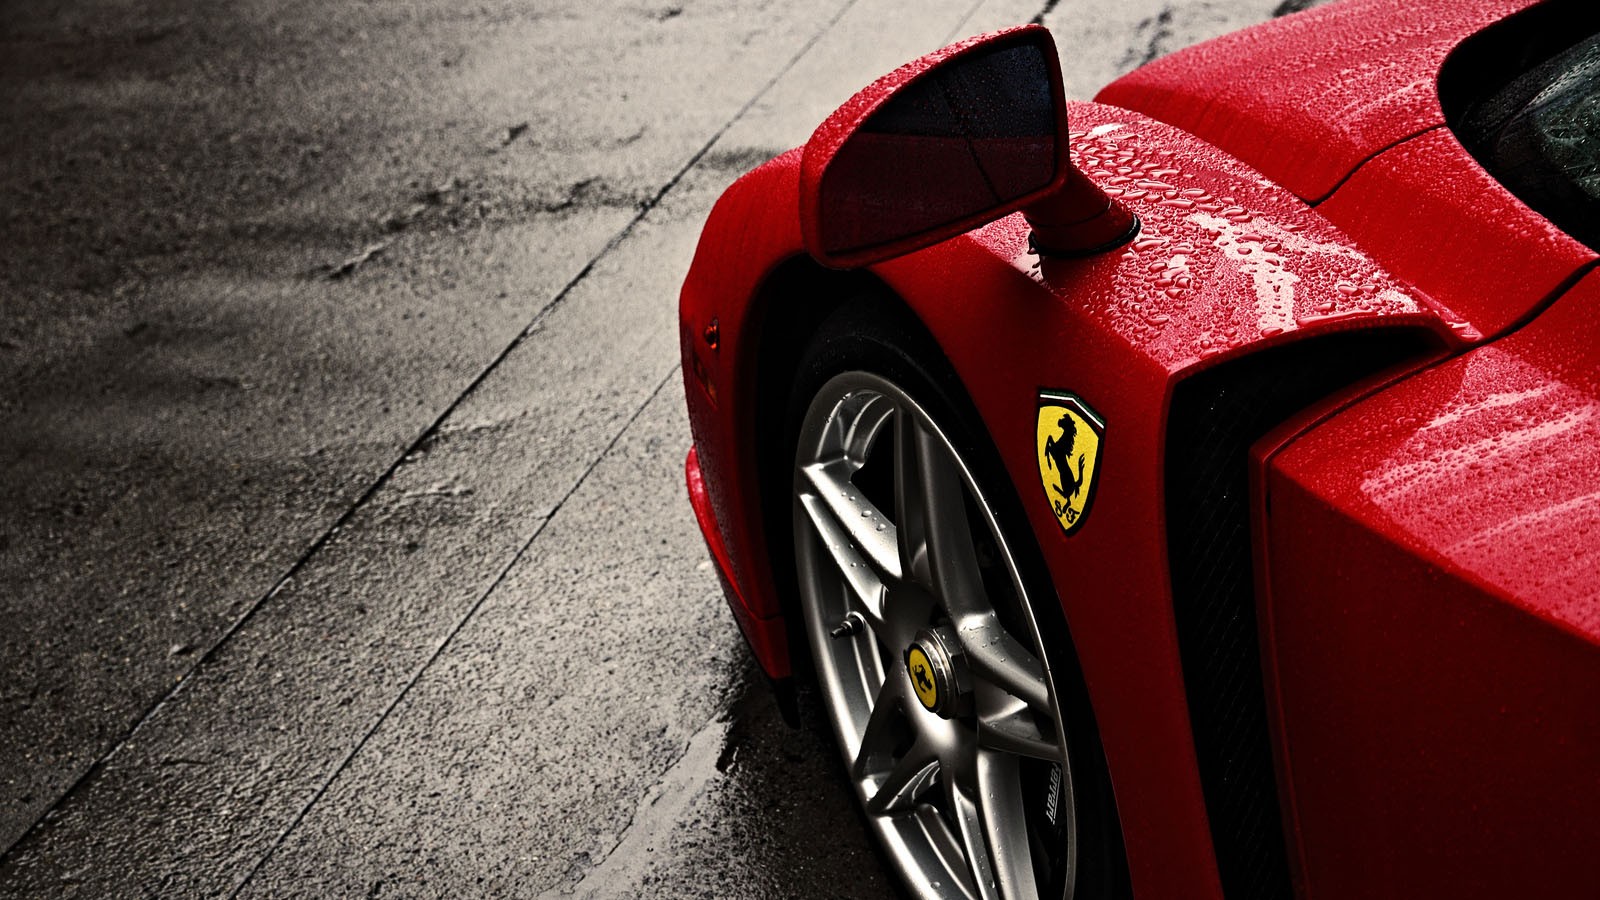 Ferrari Image HD Image At Digitalimagemakerworld